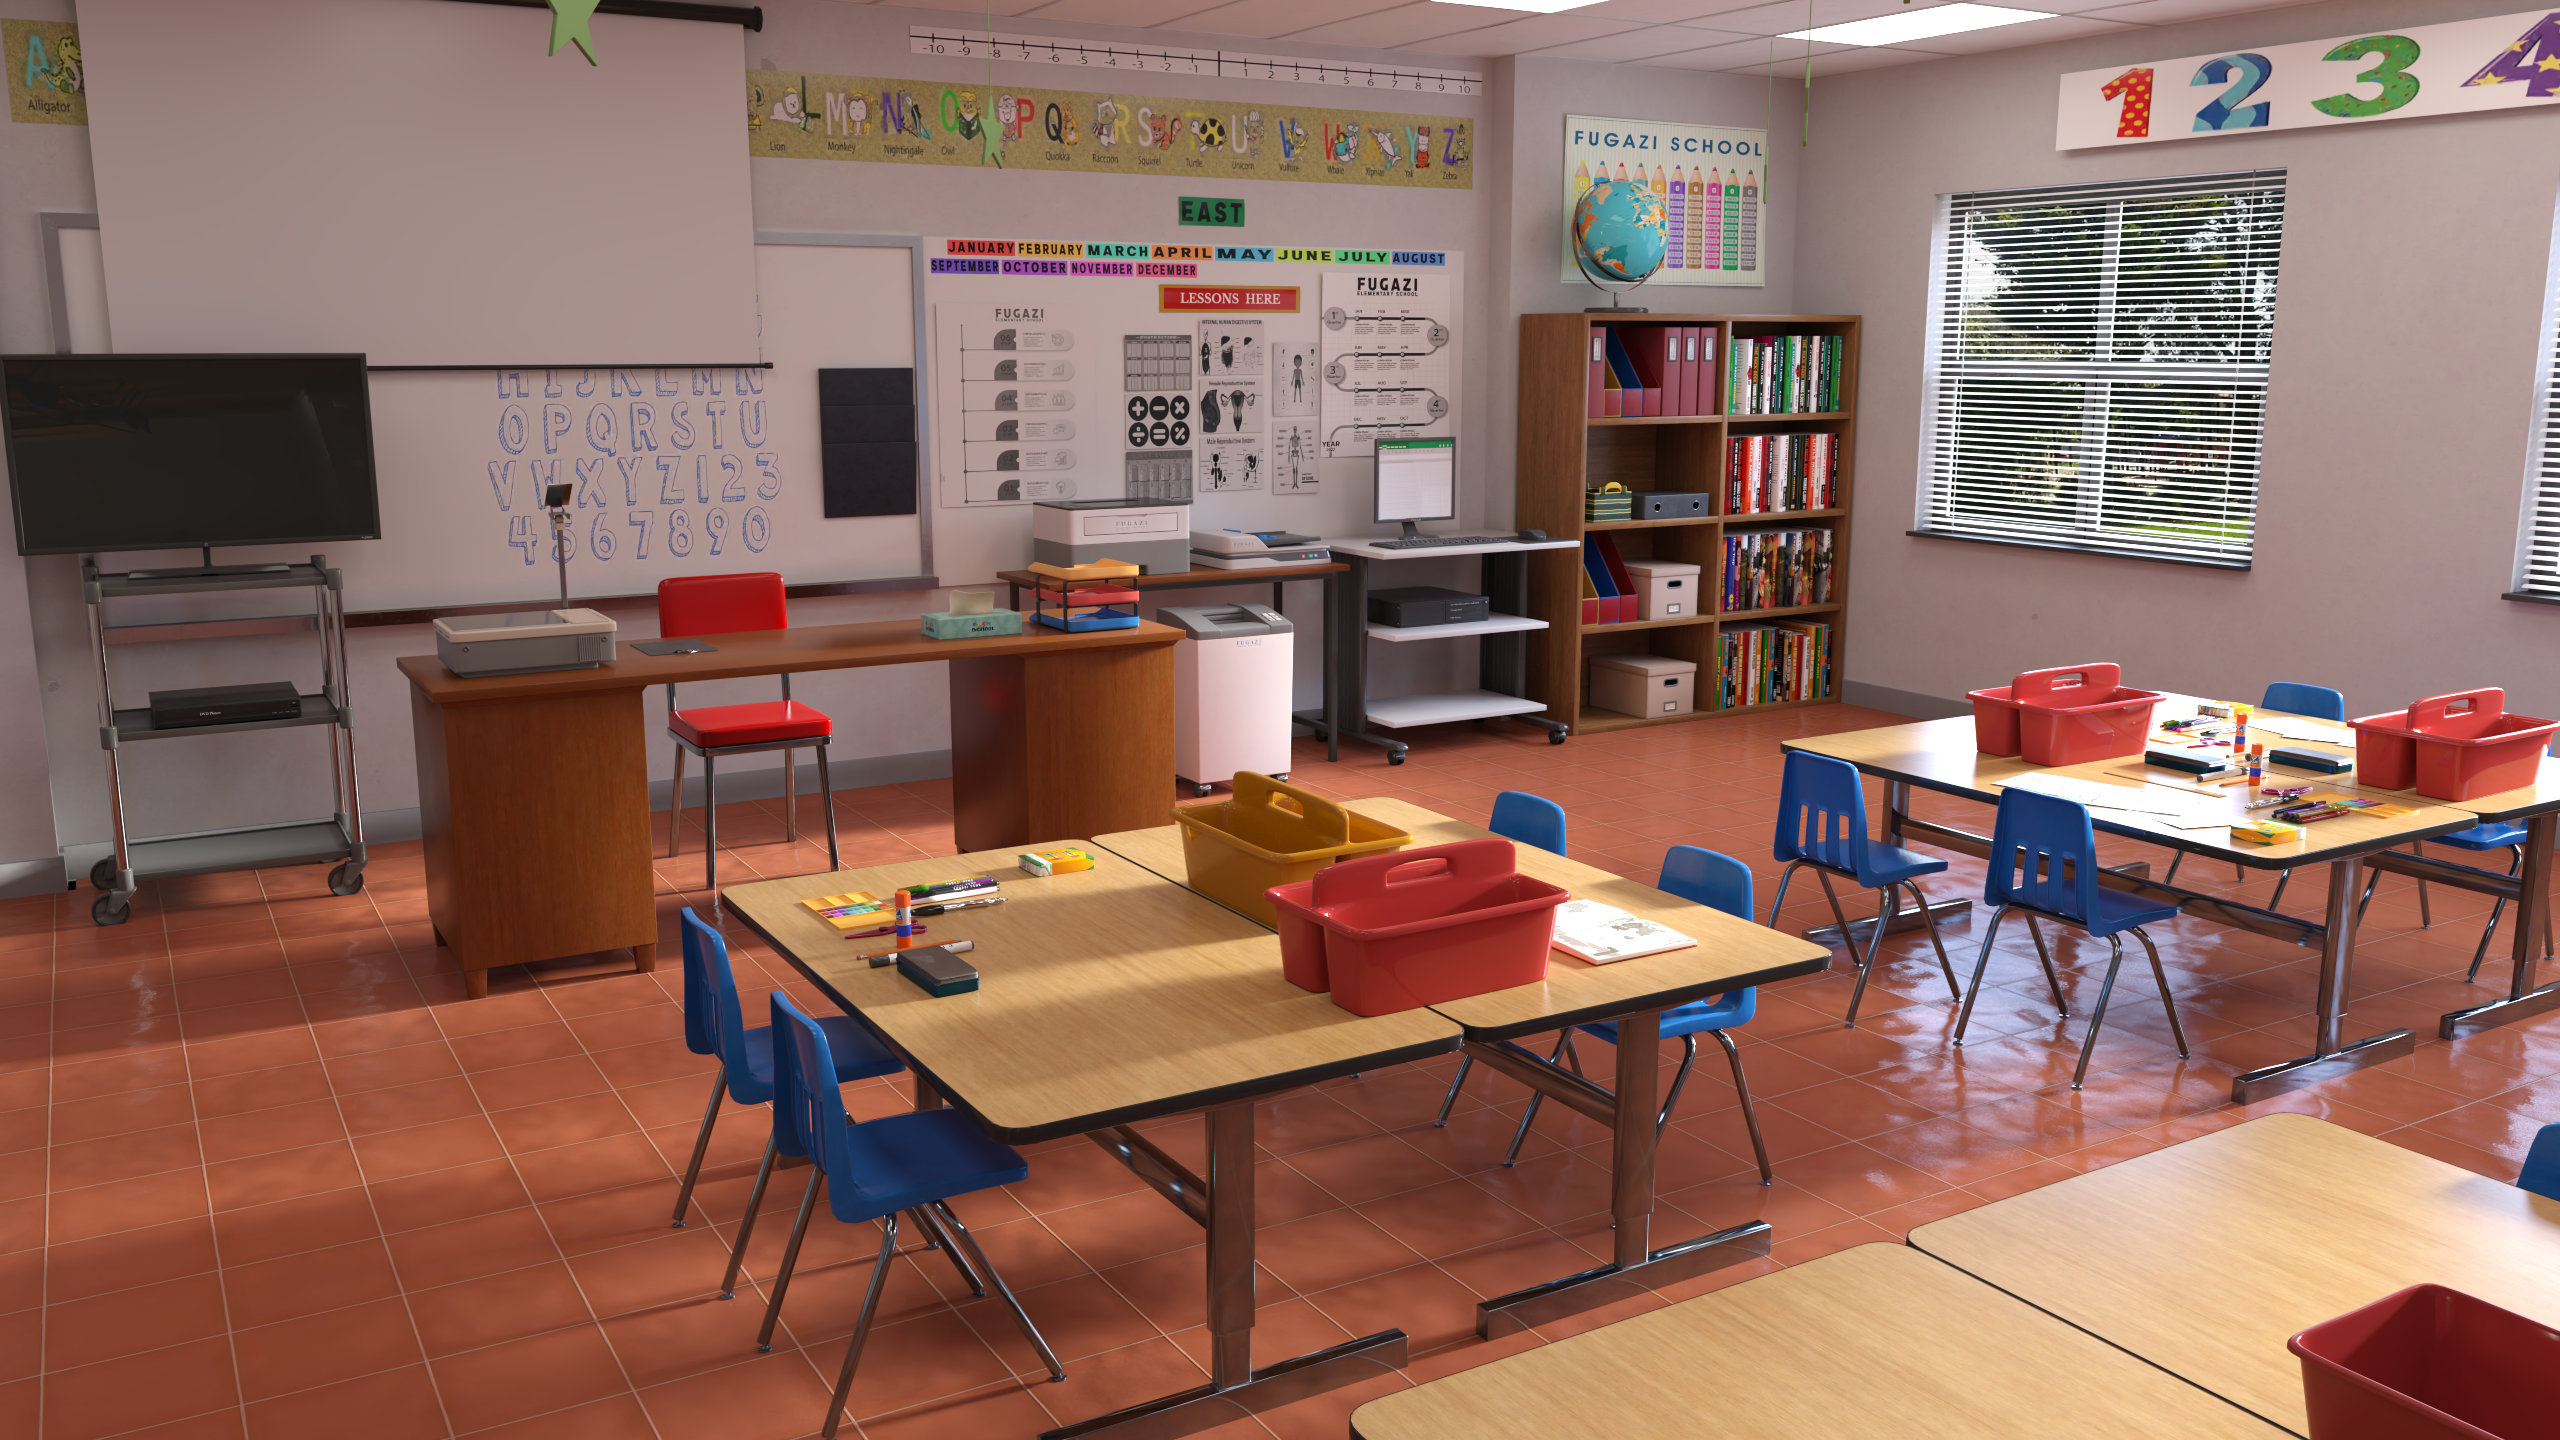 FG Elementary Classroom by: IronmanFugazi1968, 3D Models by Daz 3D